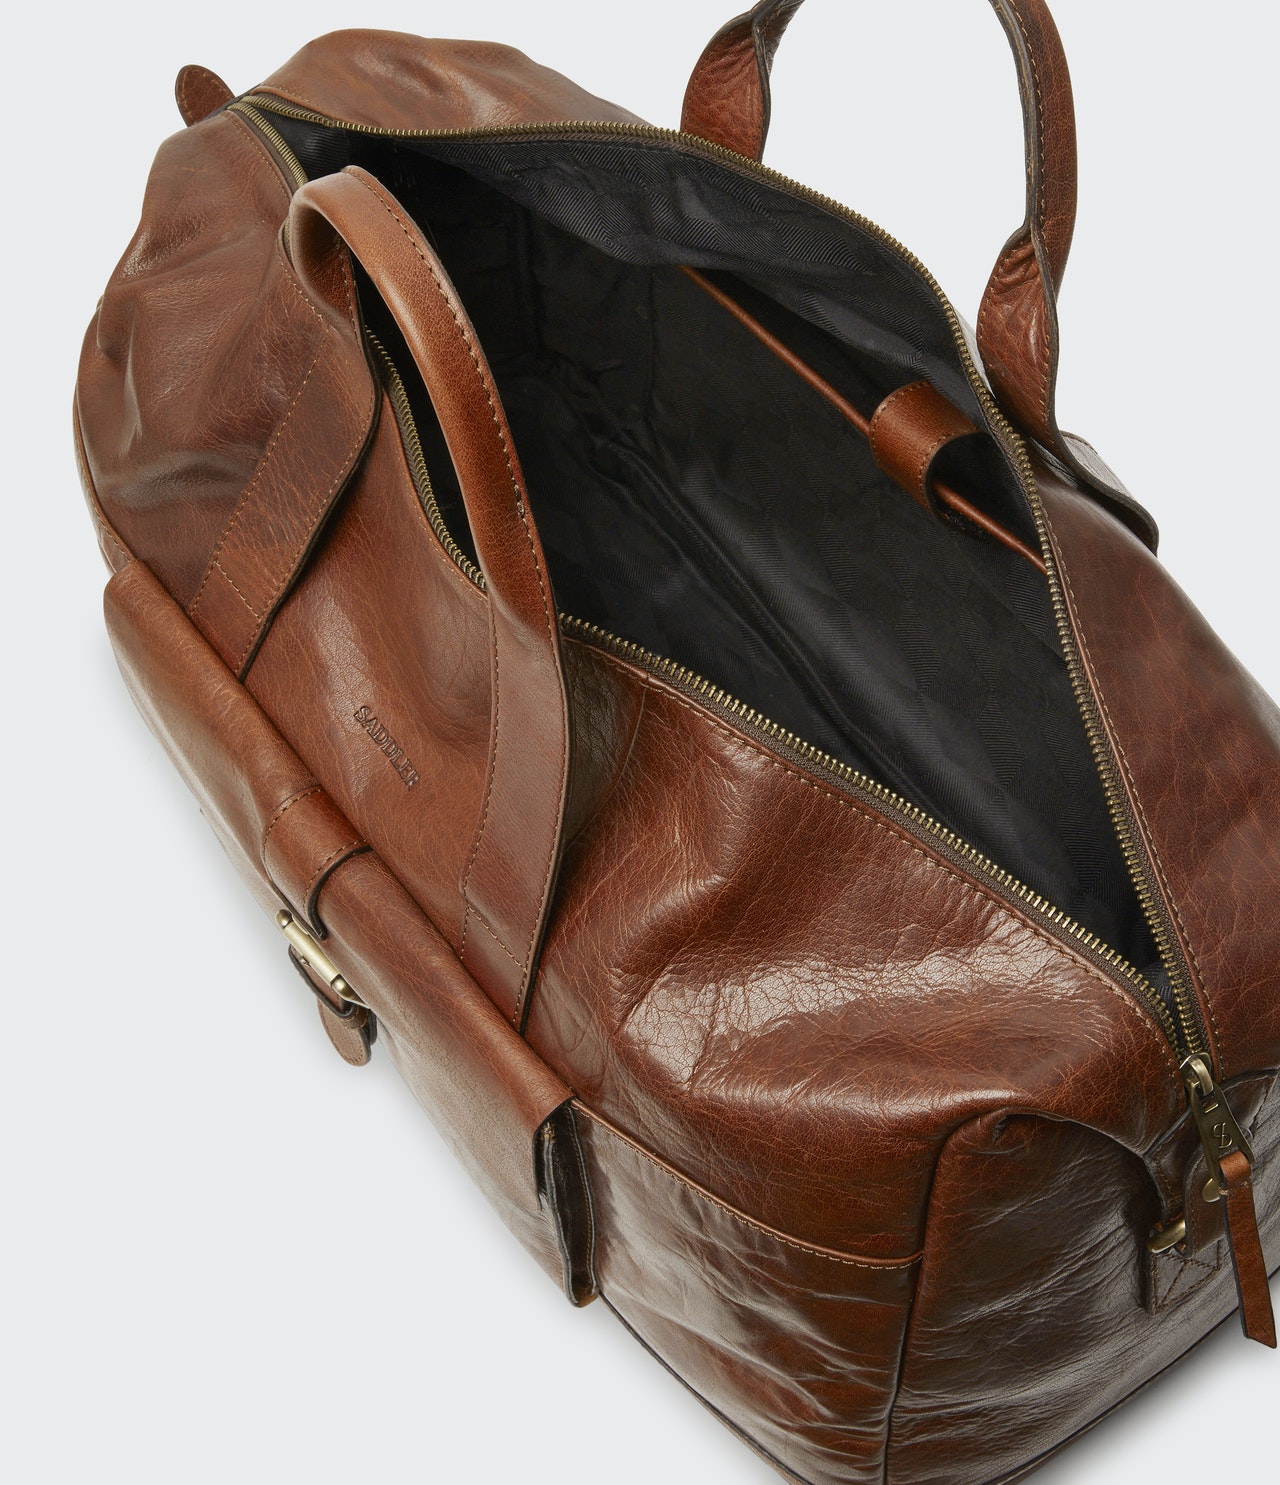 Buy Metz weekend bag at saddler.com - The swedish leather brand | Saddler |  Saddler